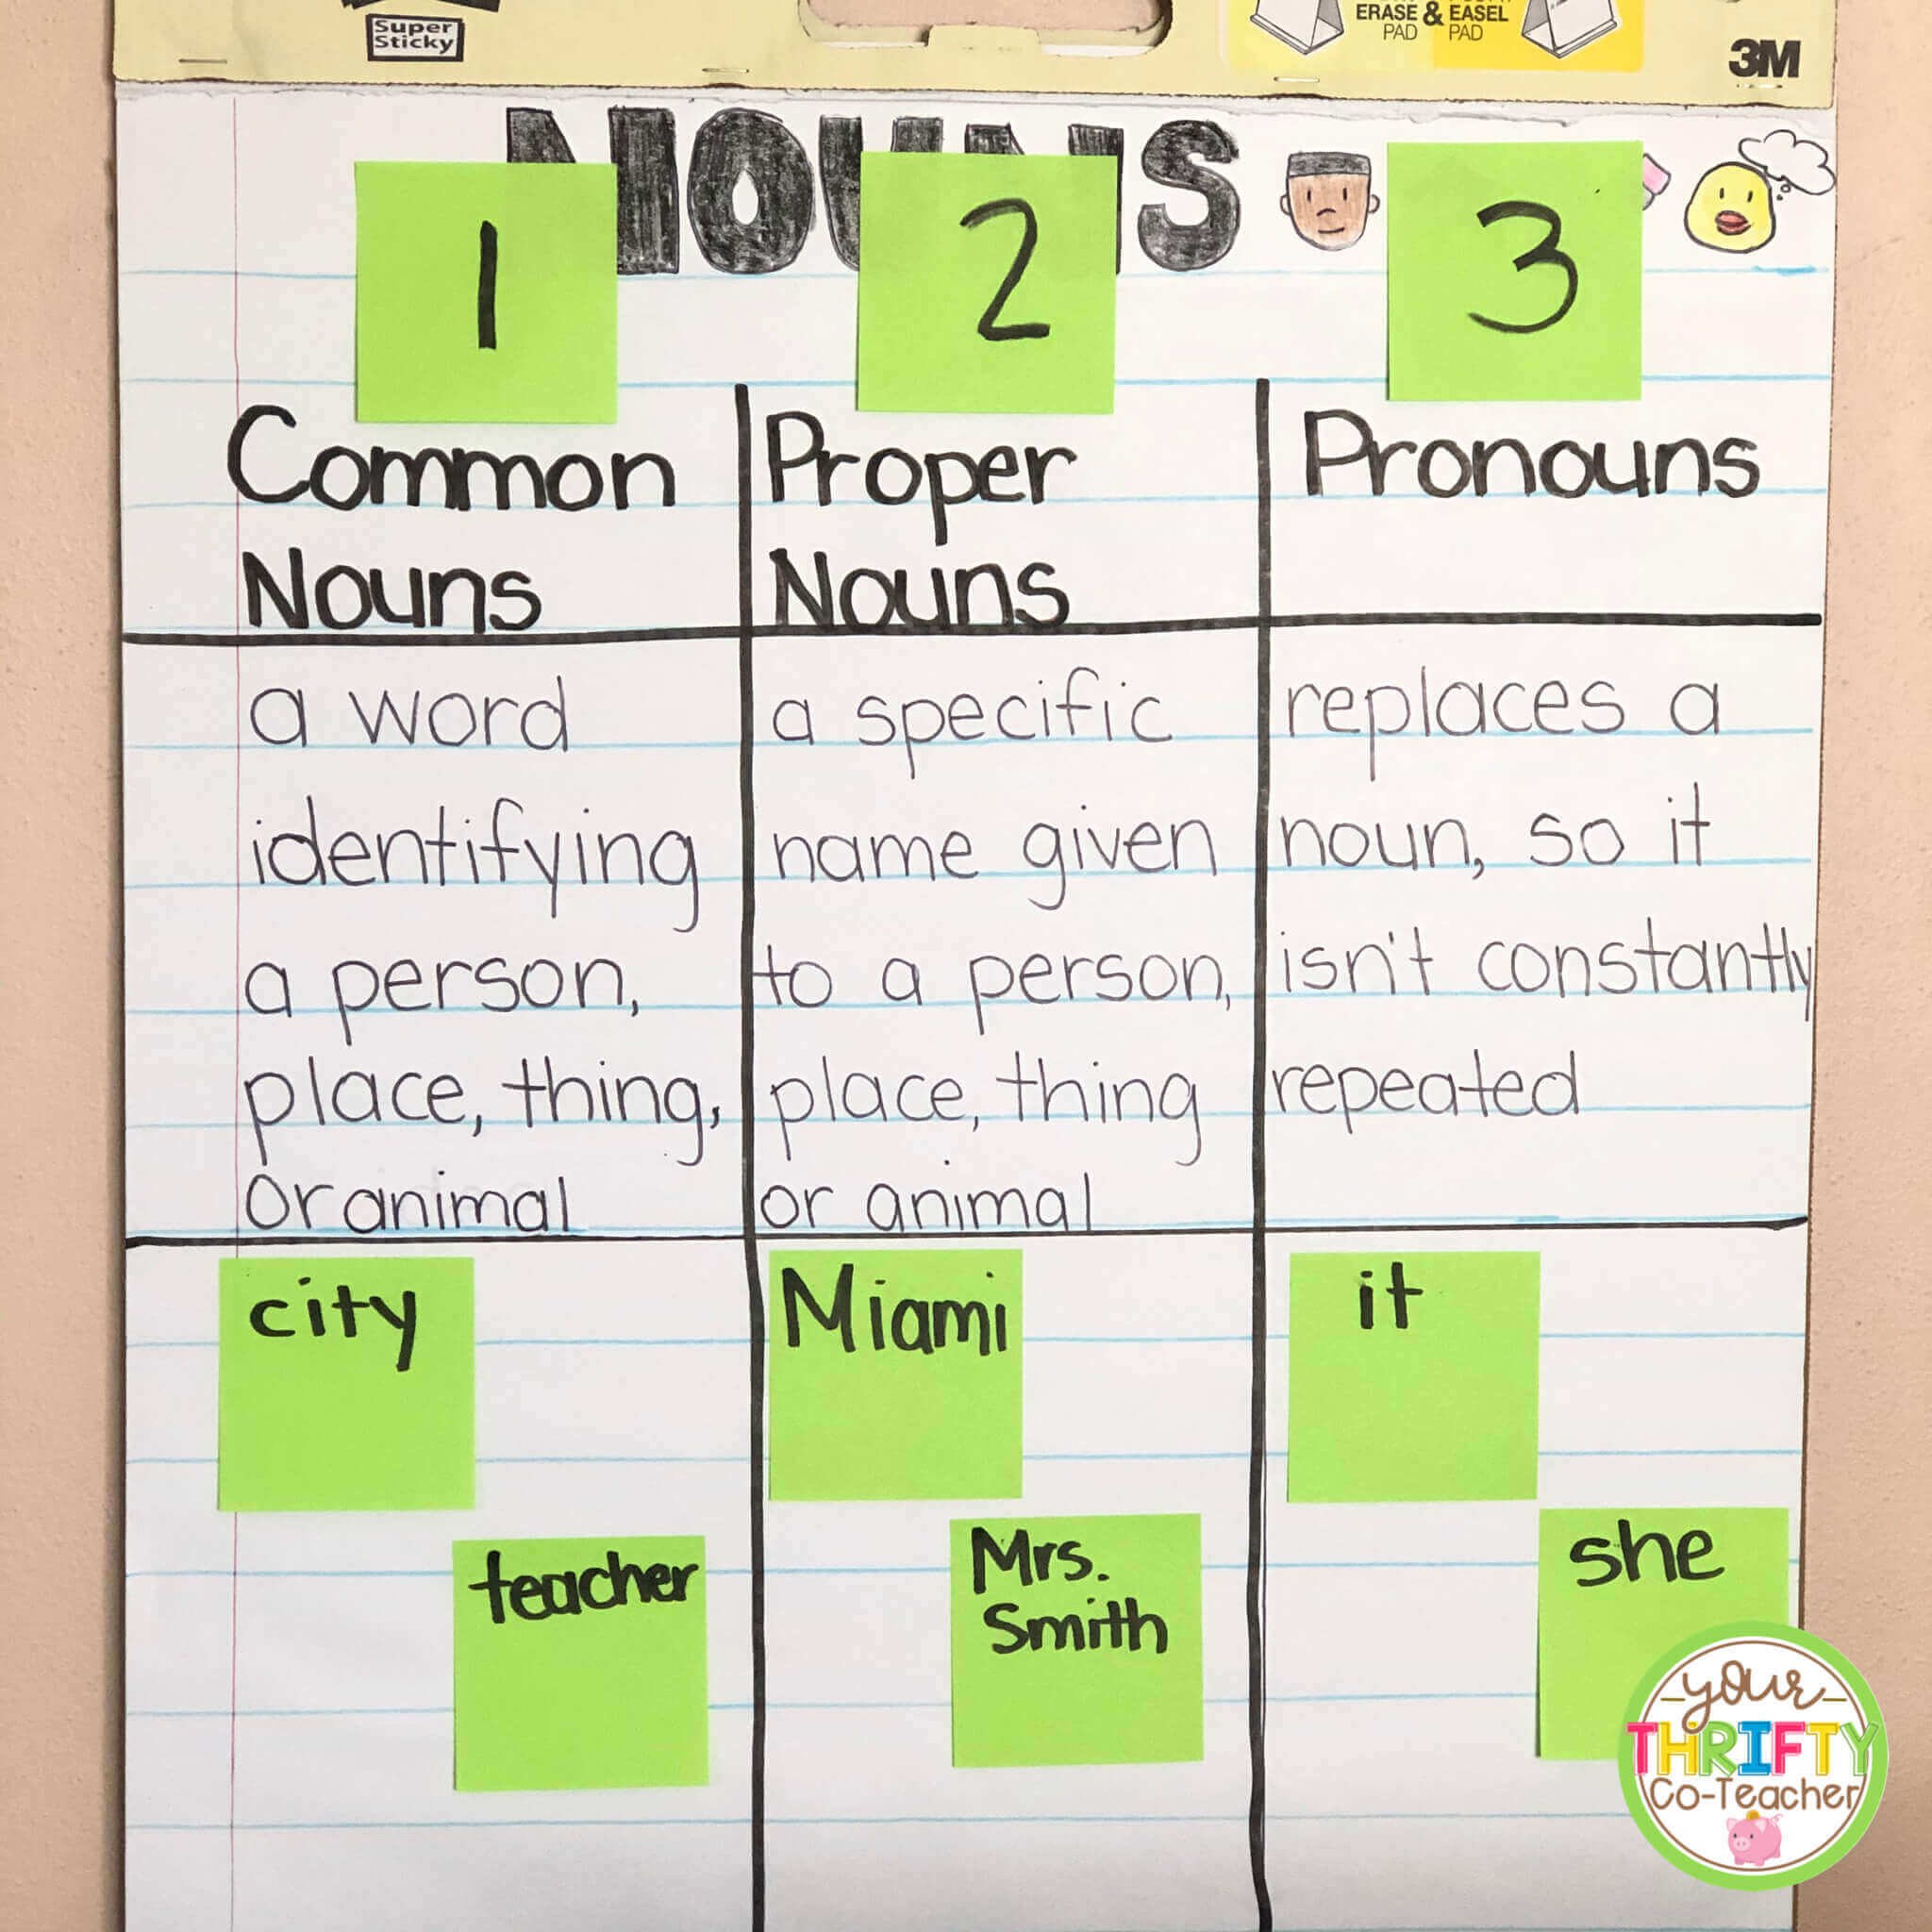 Pronouns Chart. Categories of Noun. Report Noun and verb. Pronoun a Noun in Disguise!. Bored comparative